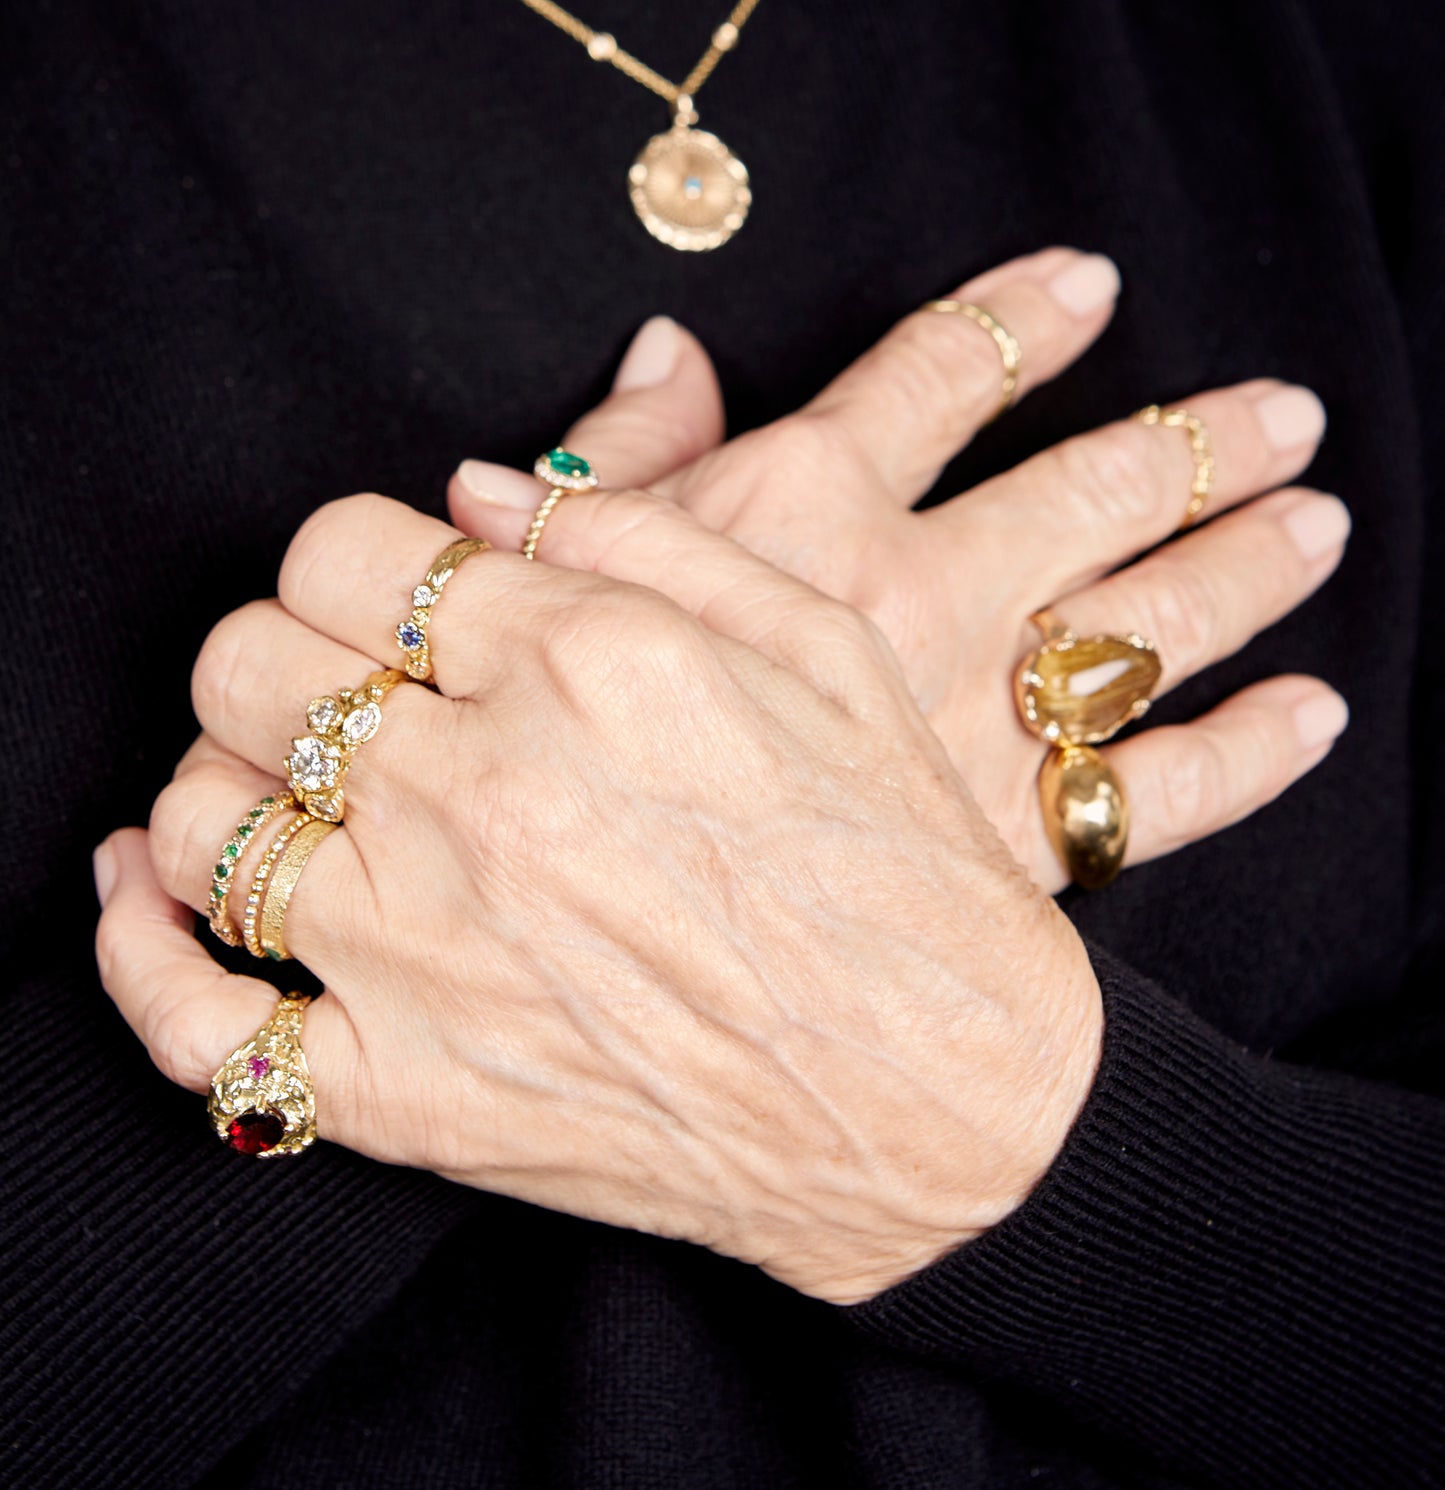 Iris, 18 carat yellow gold set with emerald and natural white diamonds